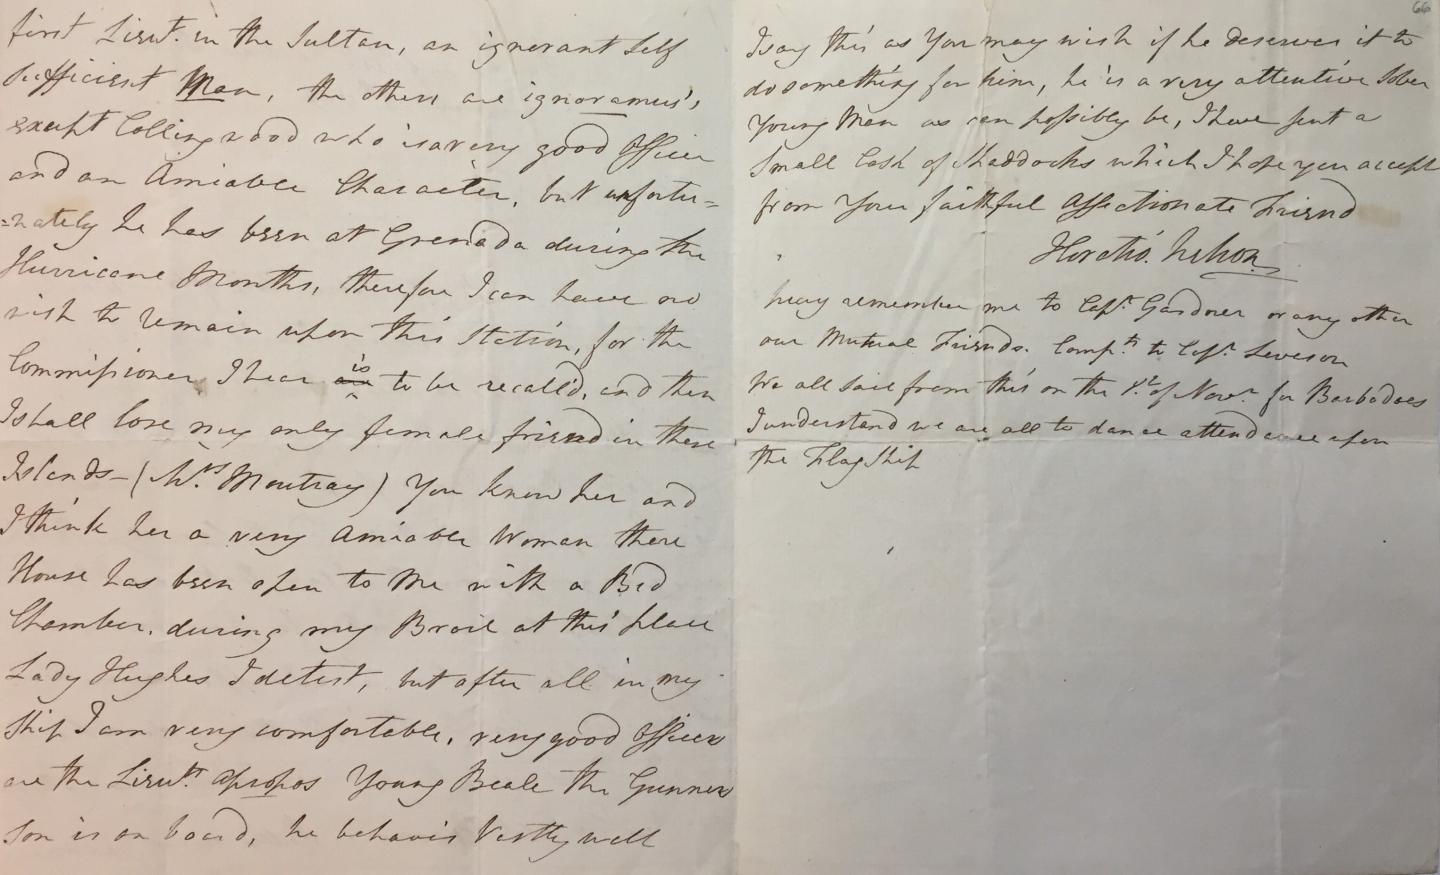 Nelson’s letter to Cornwallis